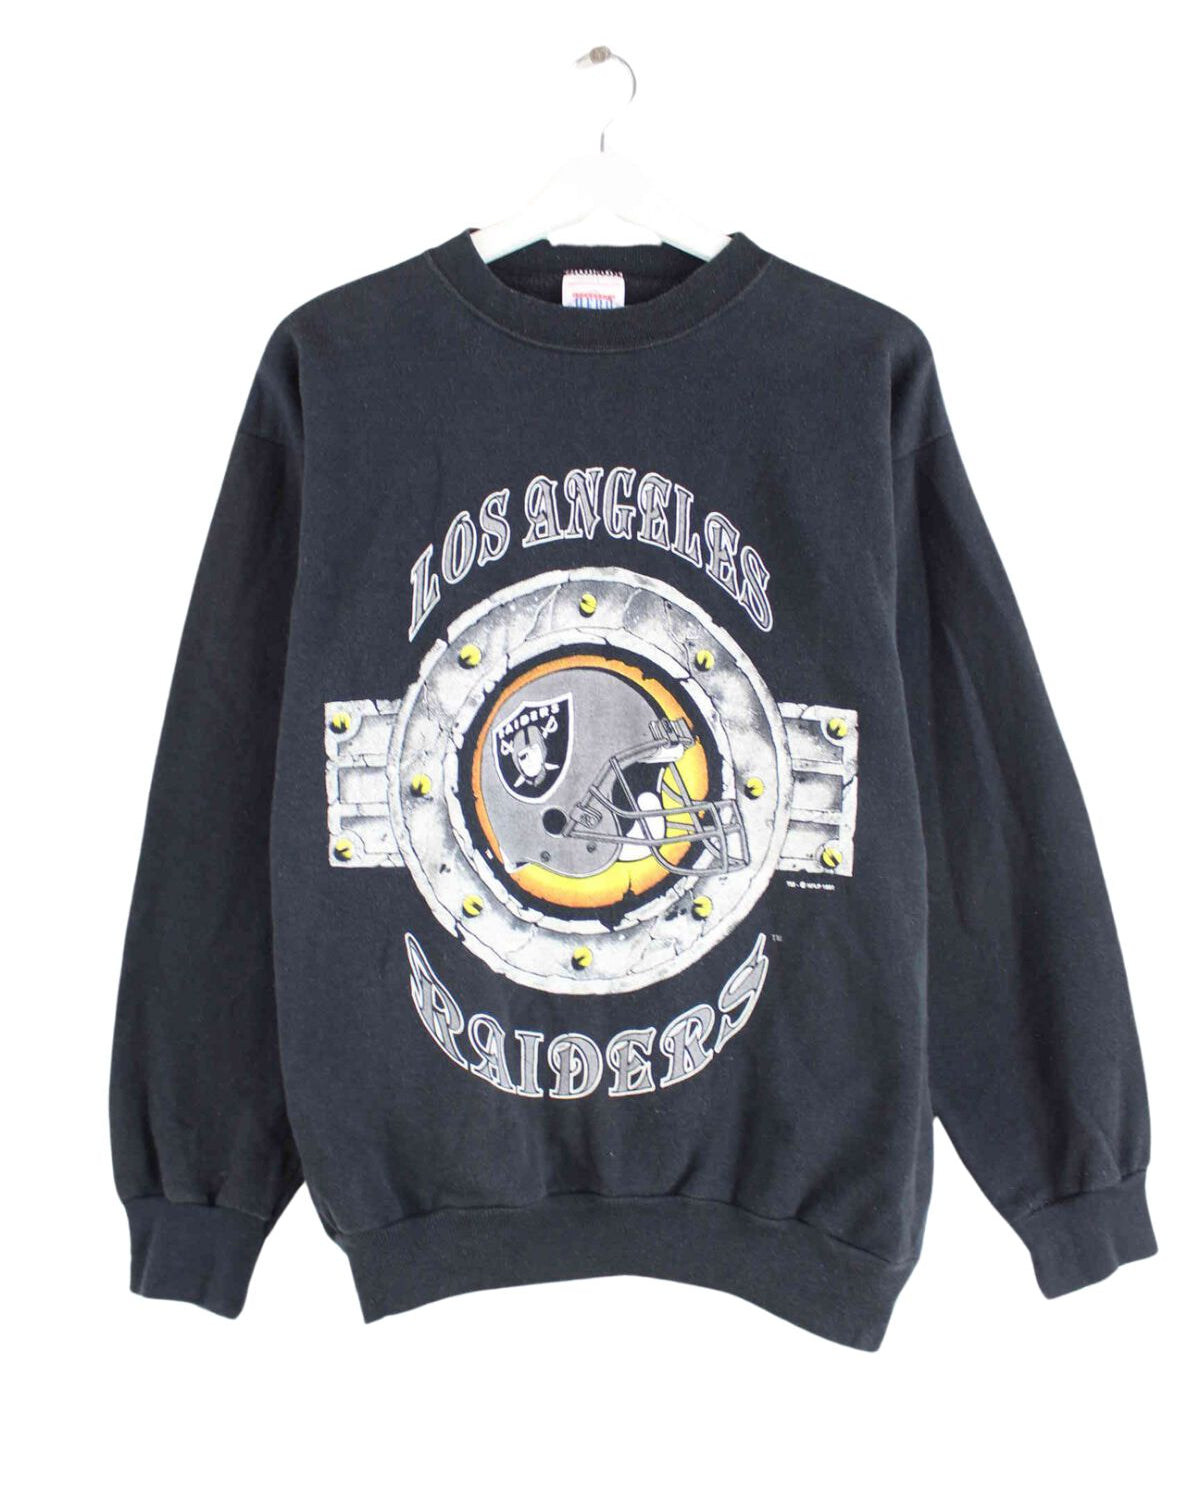 Vintage 1991 Los Angeles Raiders Sweater Schwarz M (front image)